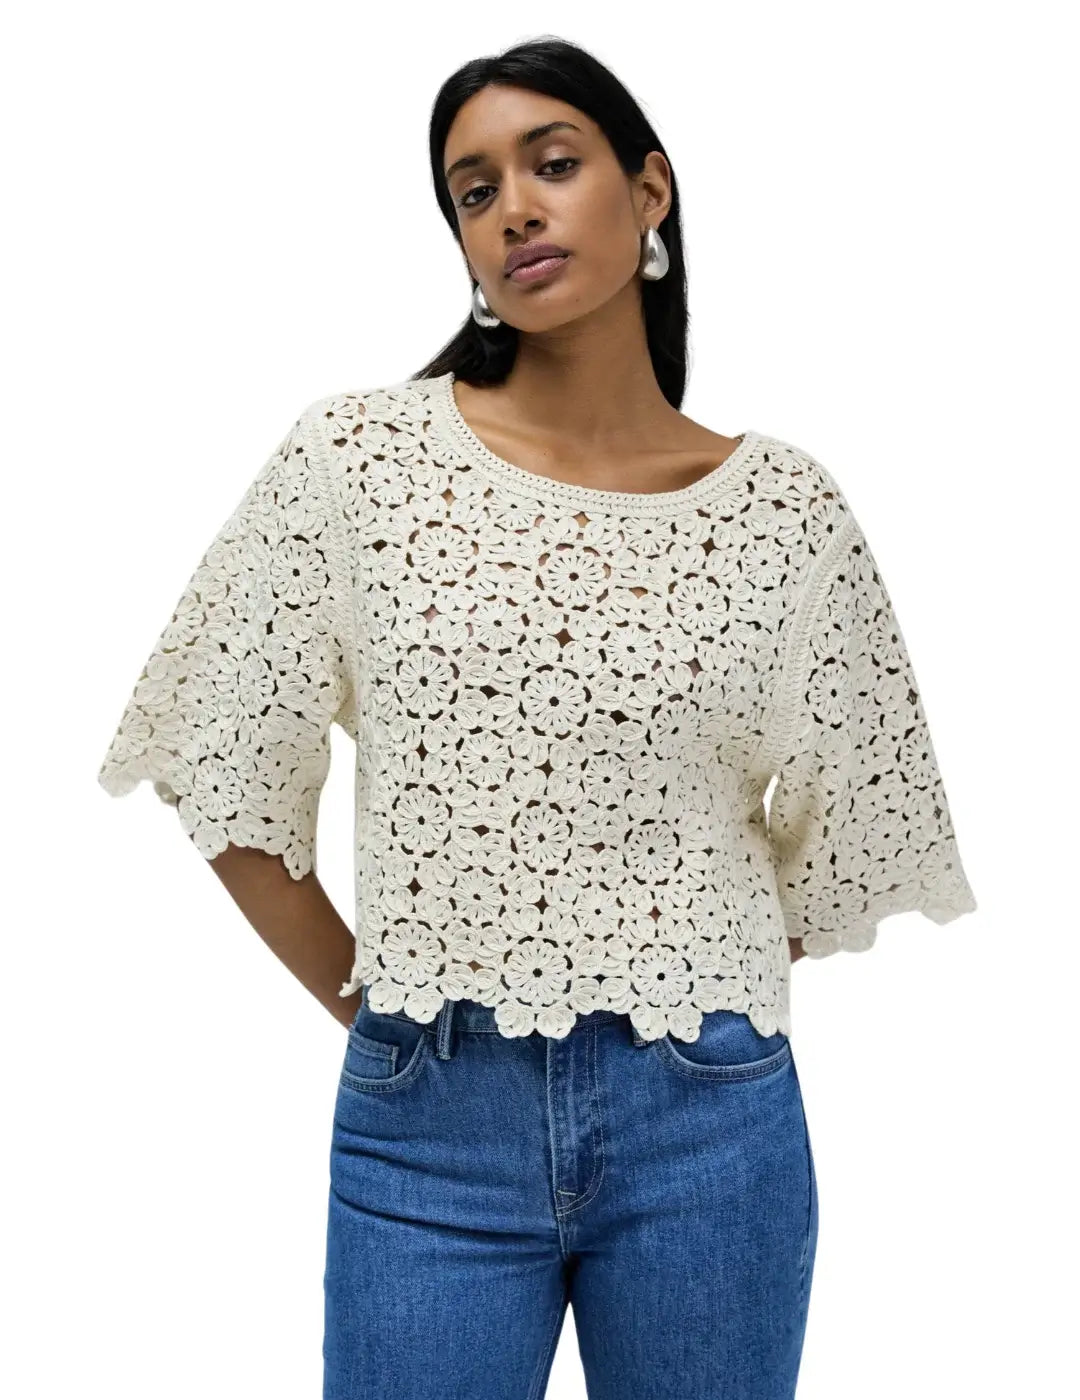 Camiseta Crochet Floral Salsa Jeans Beige | Bicos de Fío